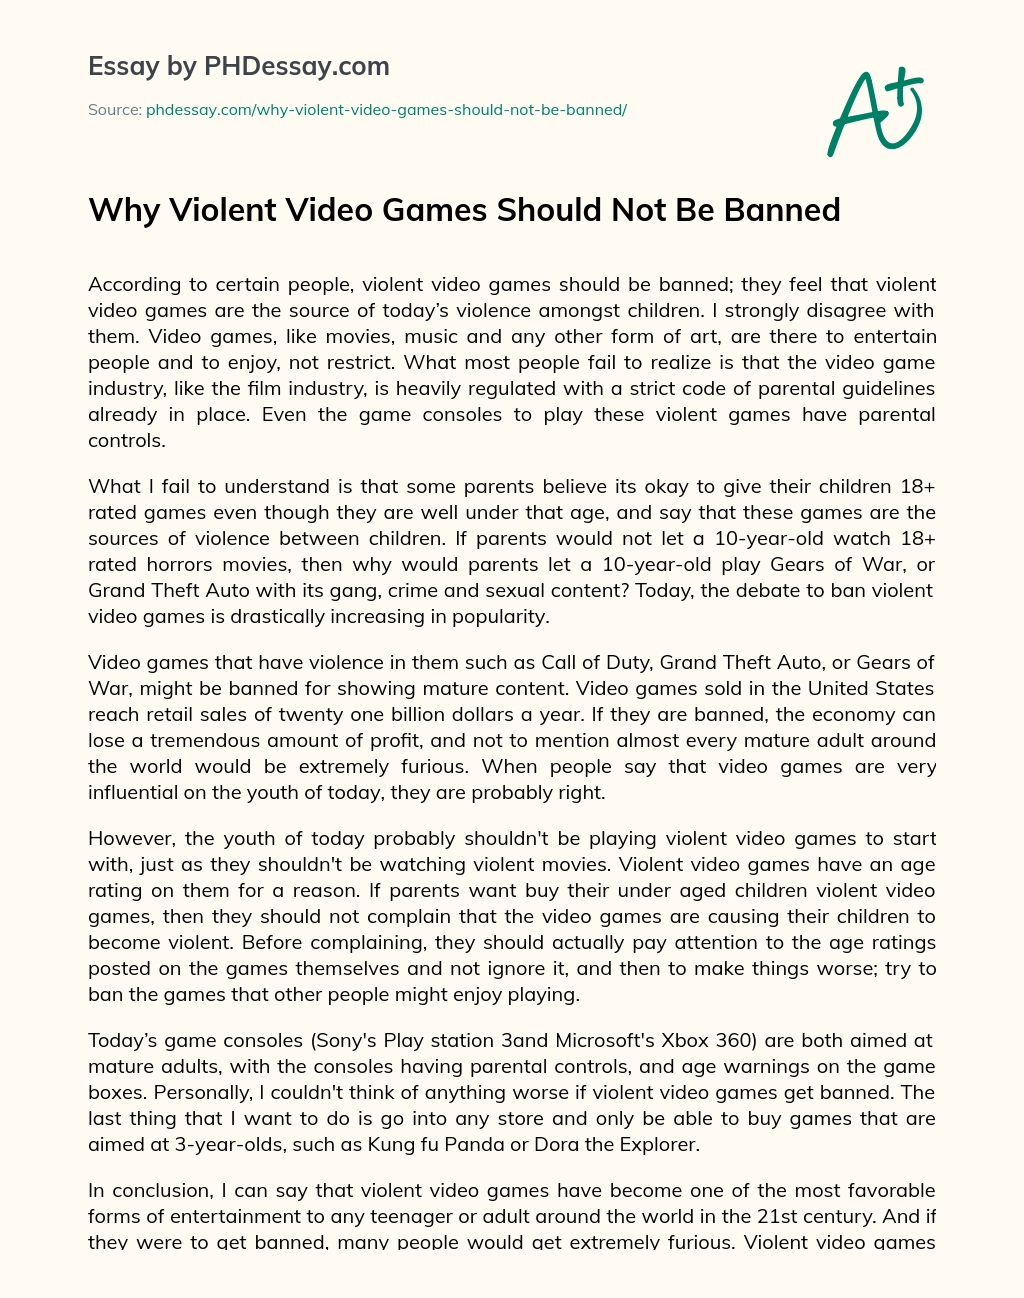 conclusion for violent video games essay